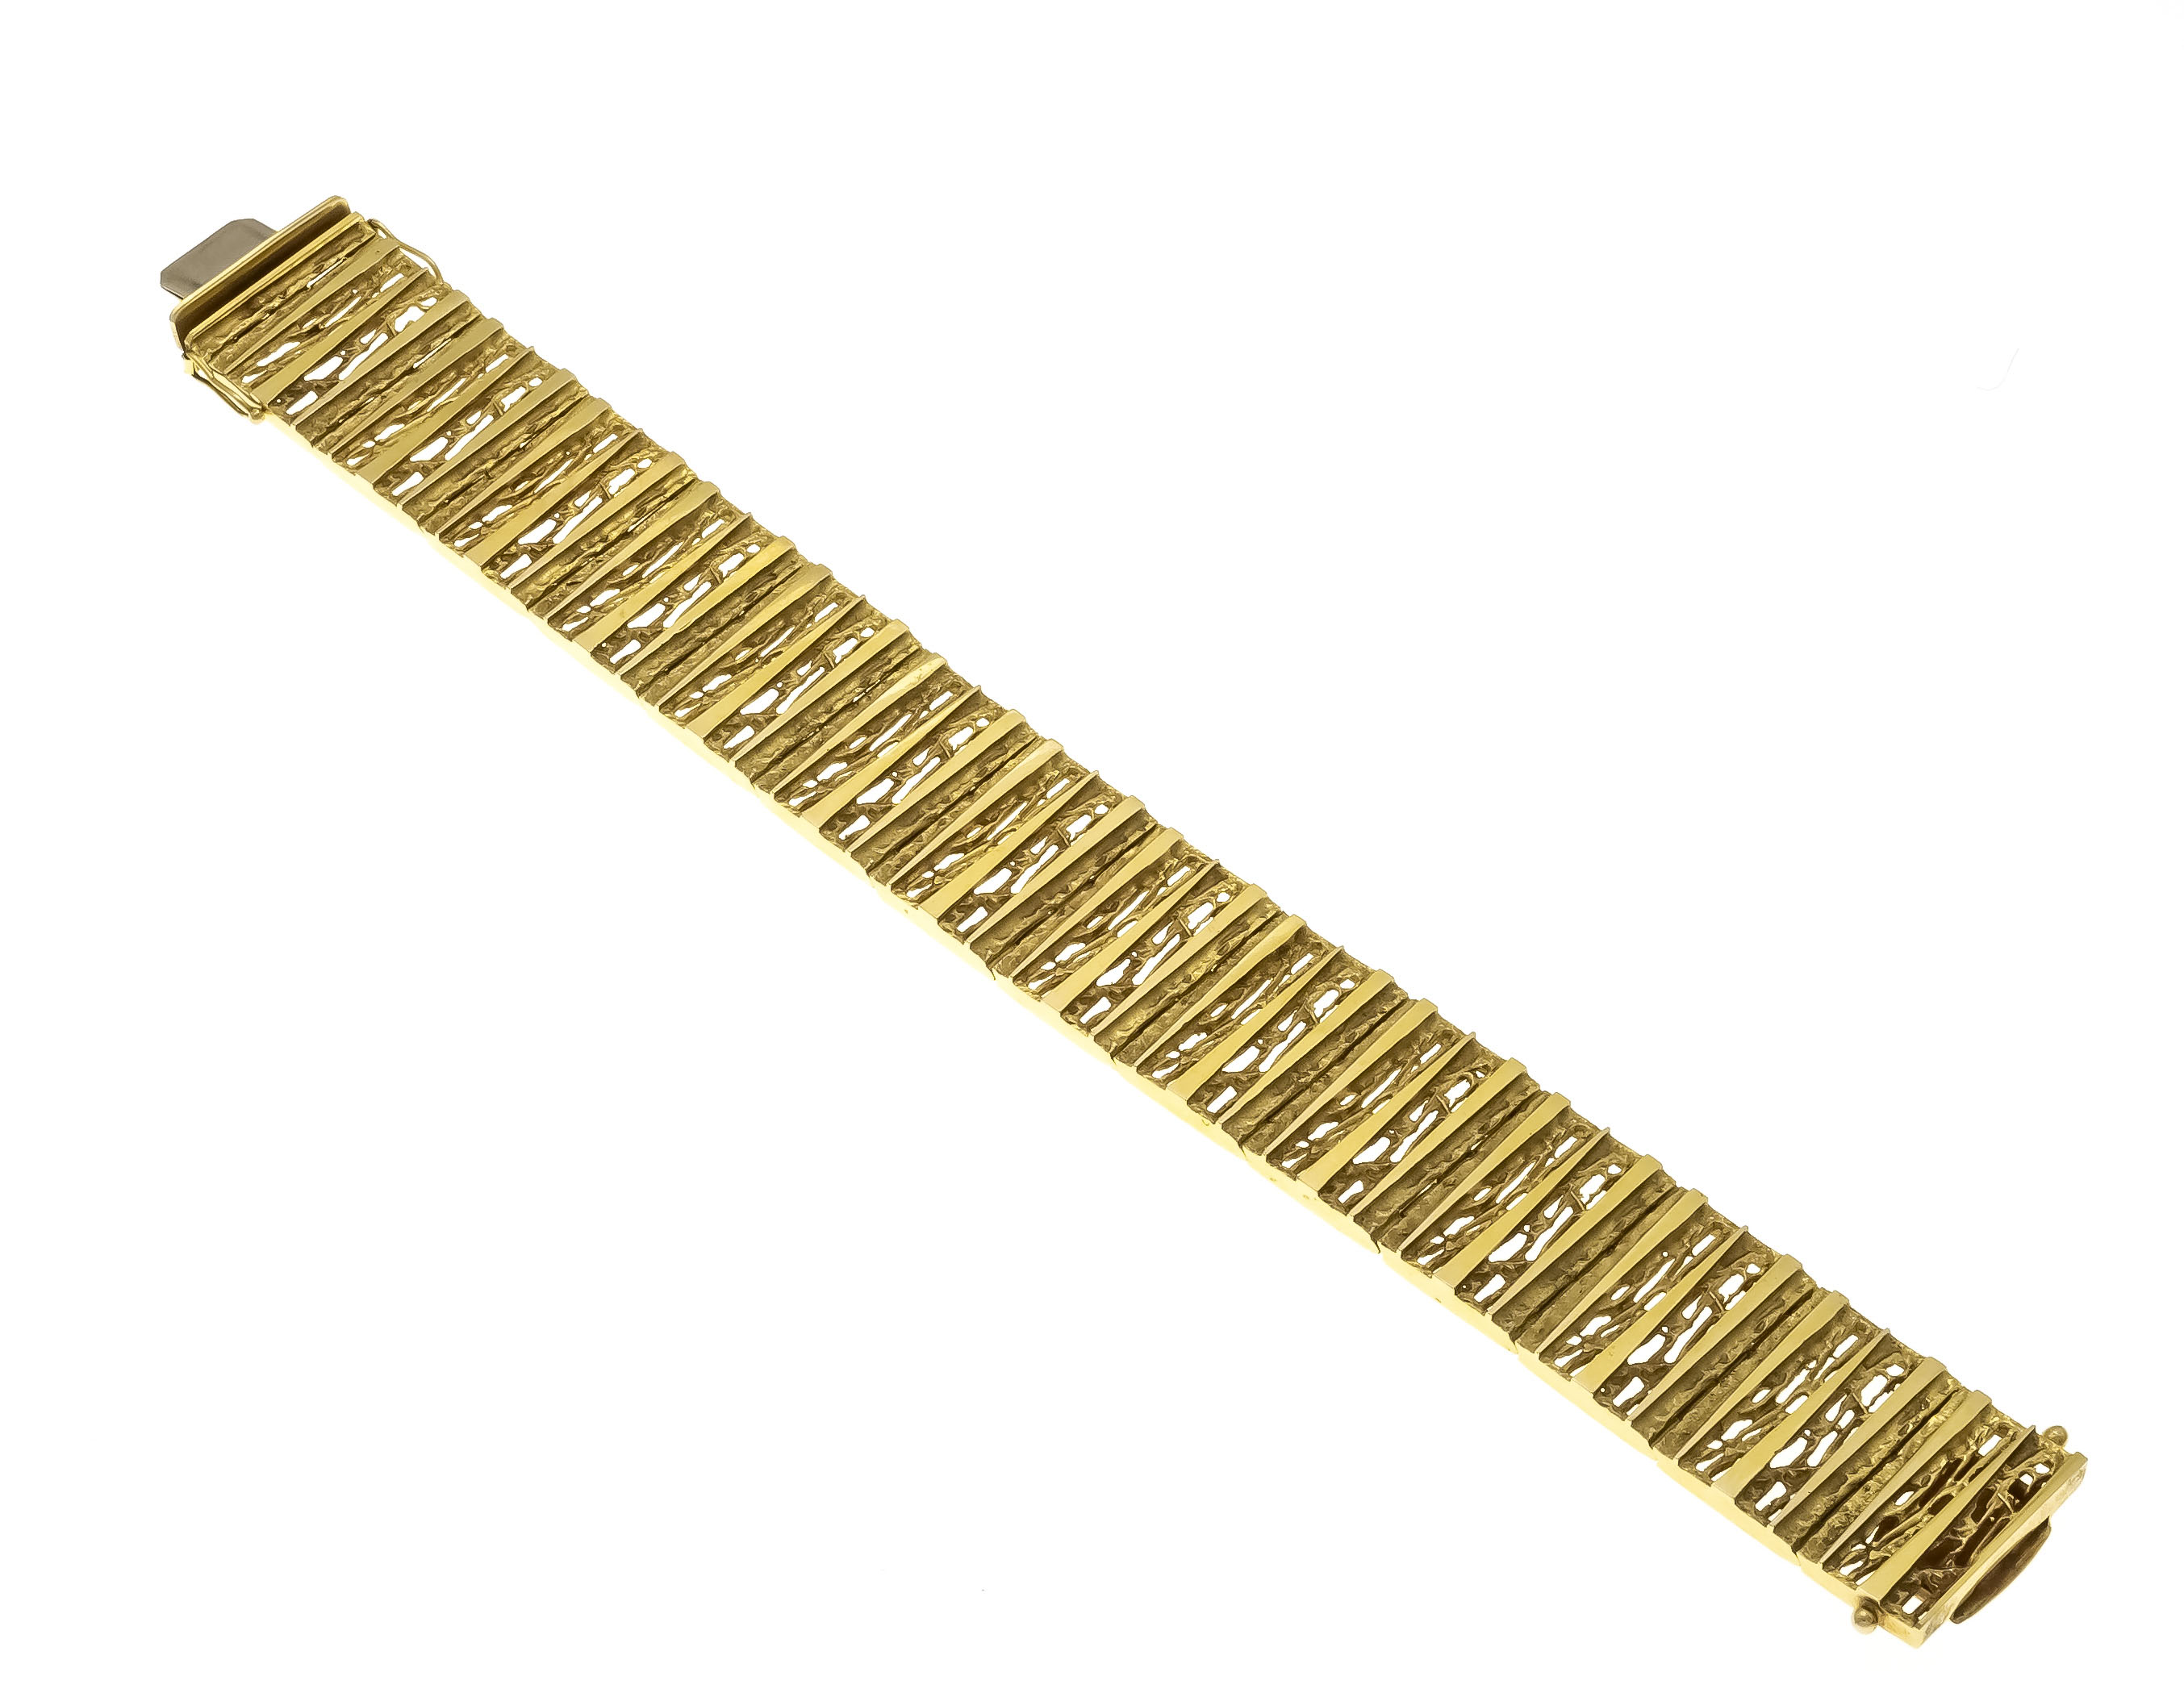 Link bracelet GG 585/000 box clasp, w.22.5 mm, l. 20.0 cm, 57.4 g - Image 2 of 2